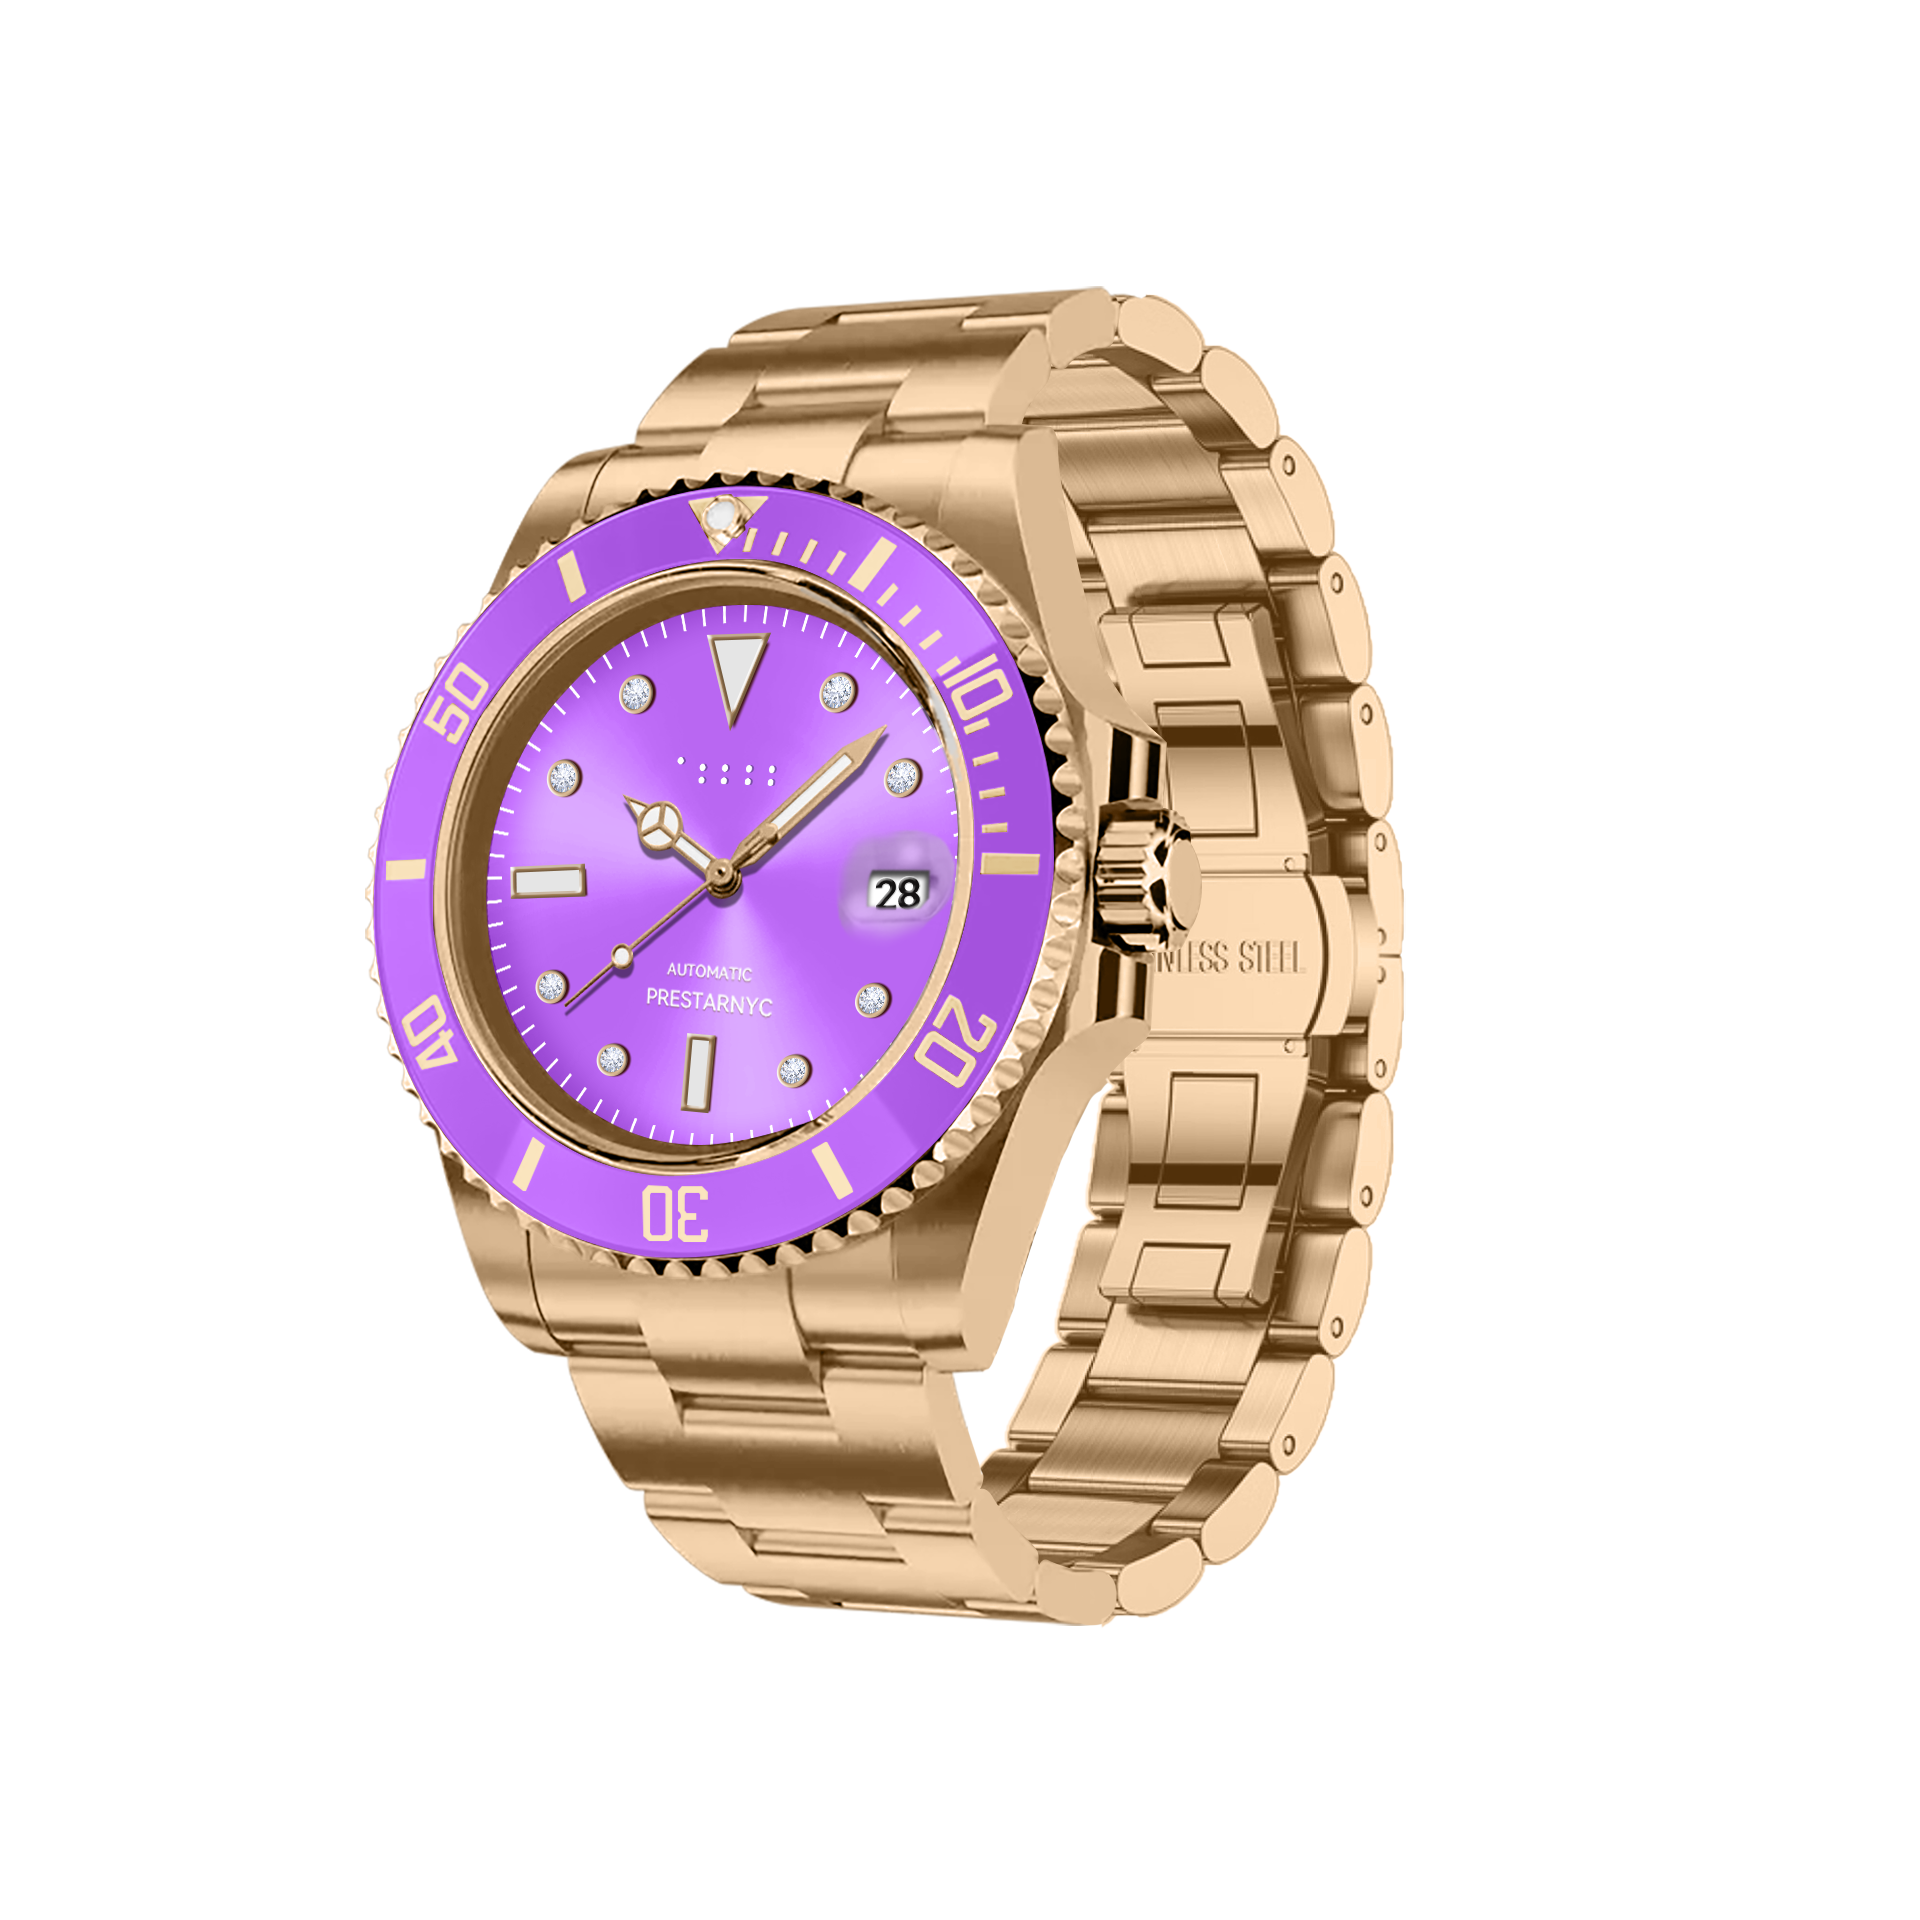 Prestar NYC Aquaman Classic Diamond Gold Watch (Lavender Elegance)